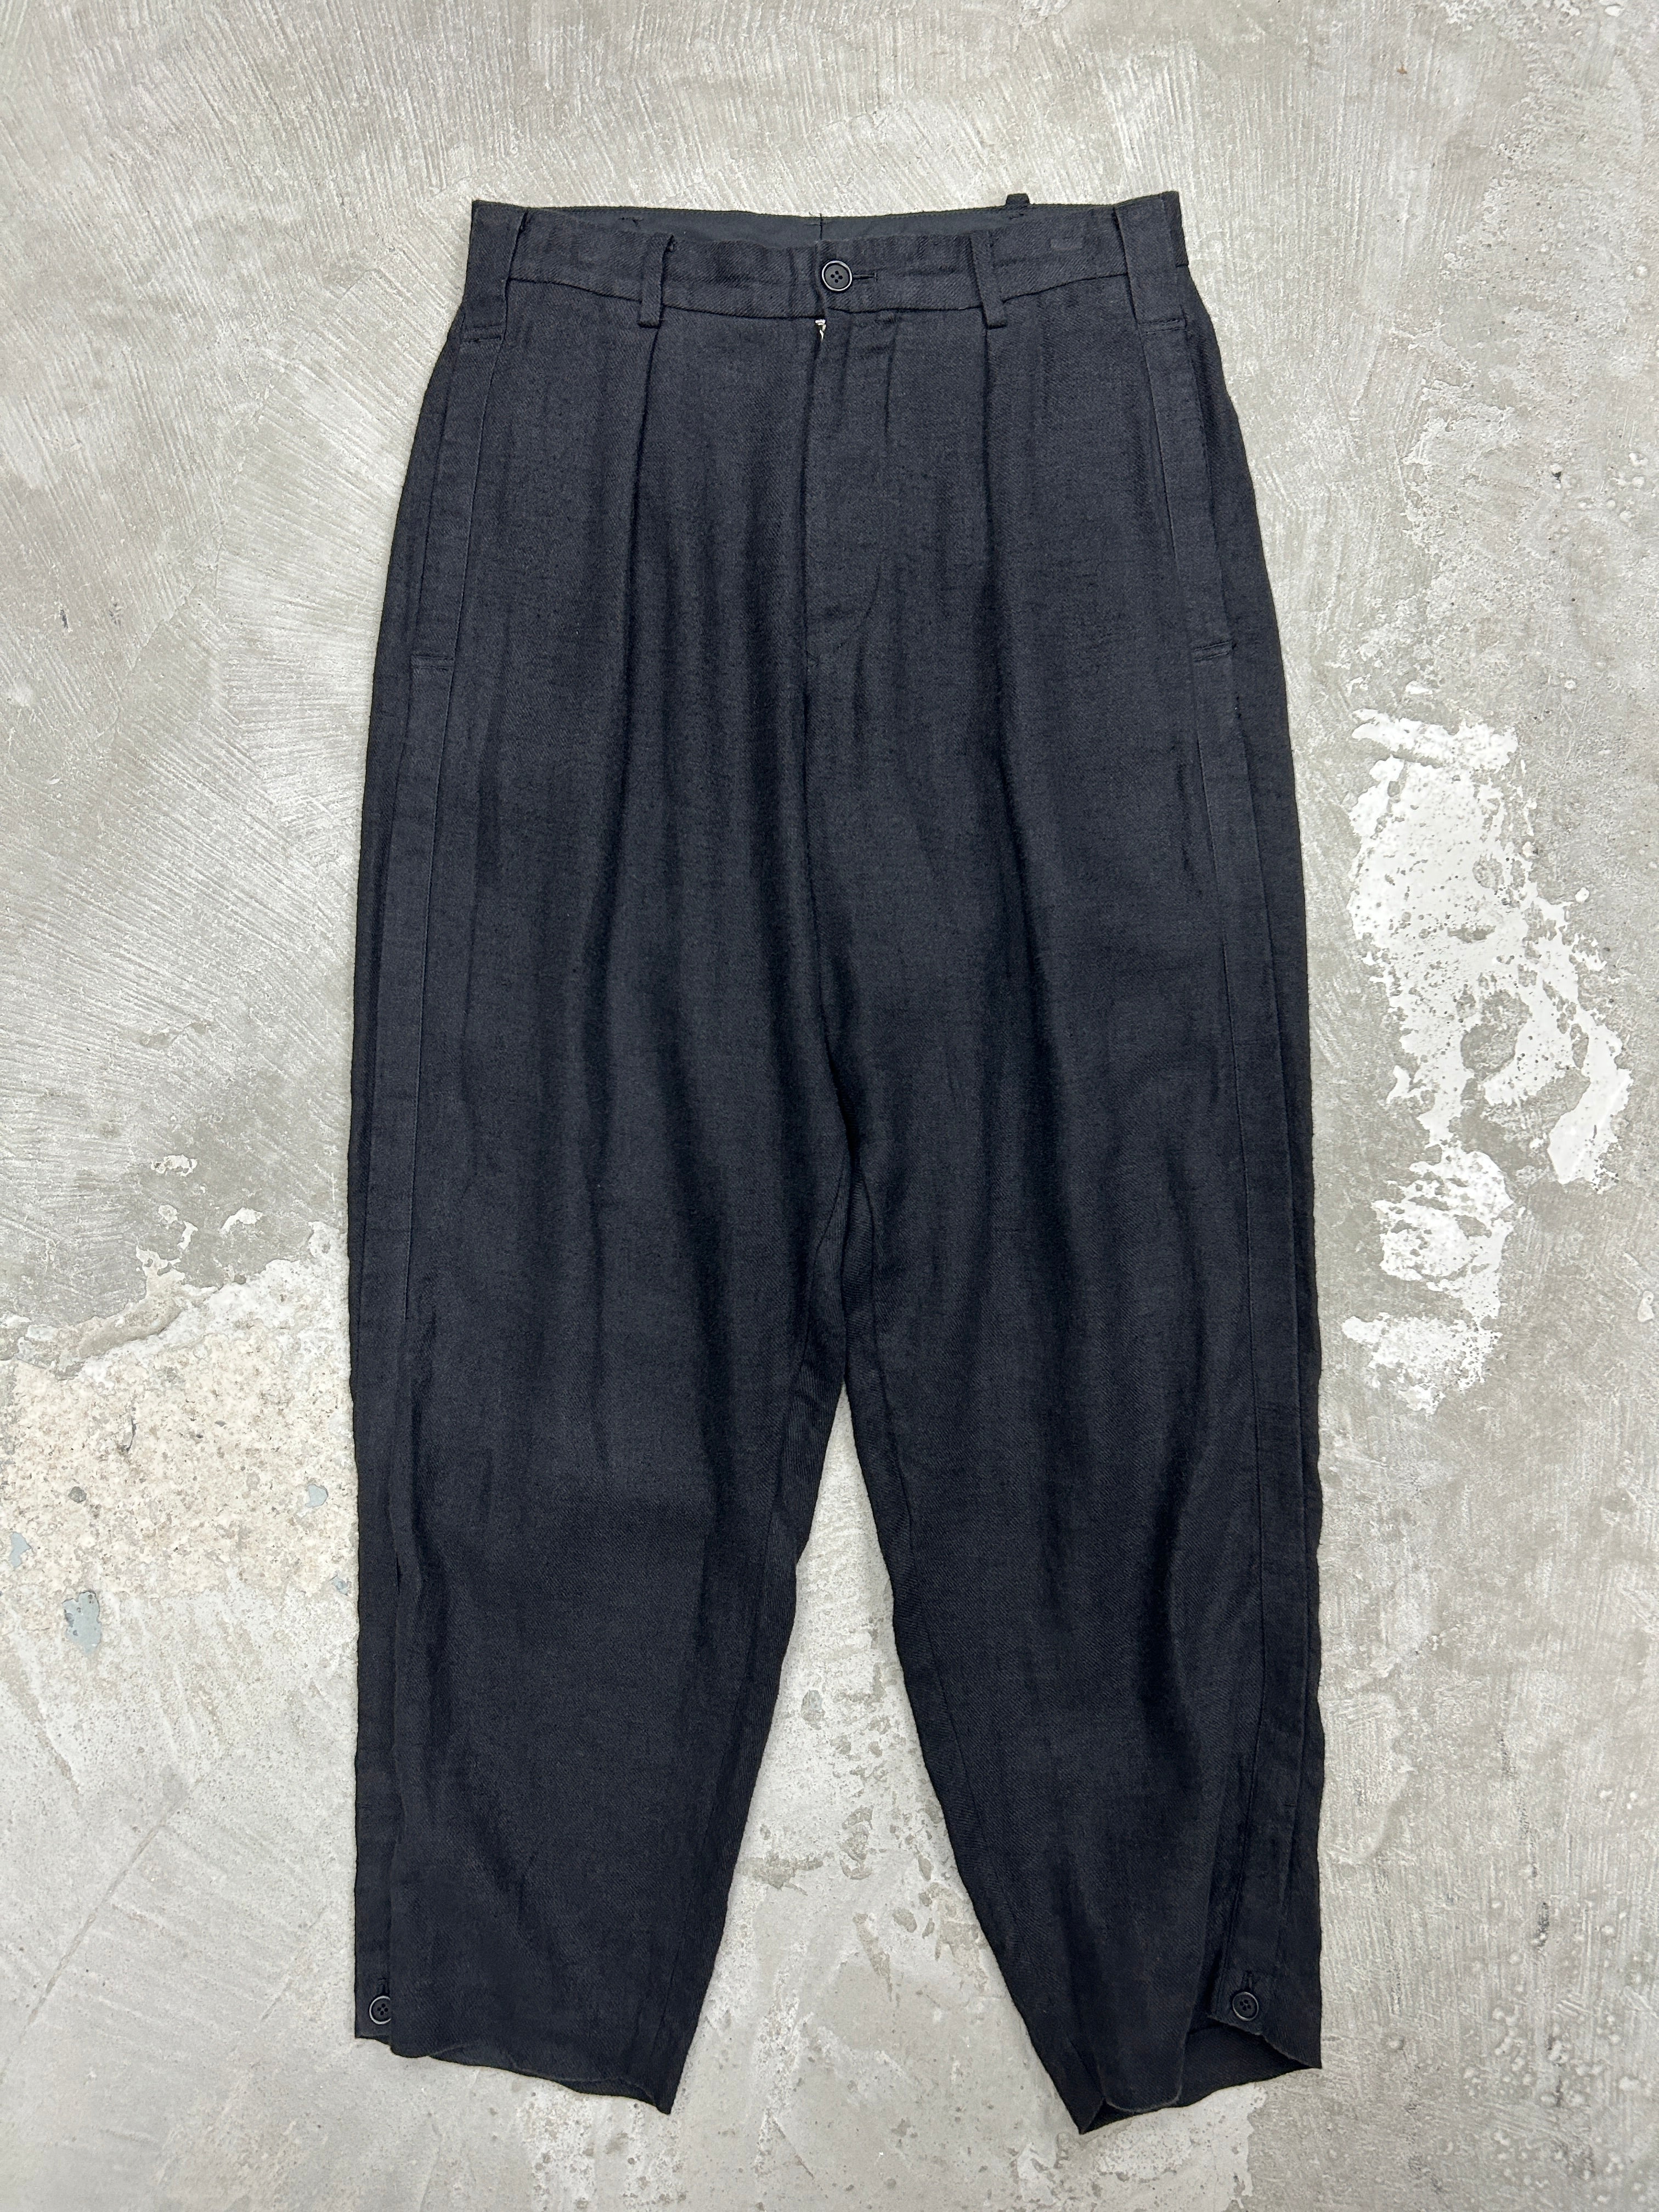 Yohji Yamamoto Pour Homme AW2012 Side Stripe Trouser - Size 3 – ALARMS